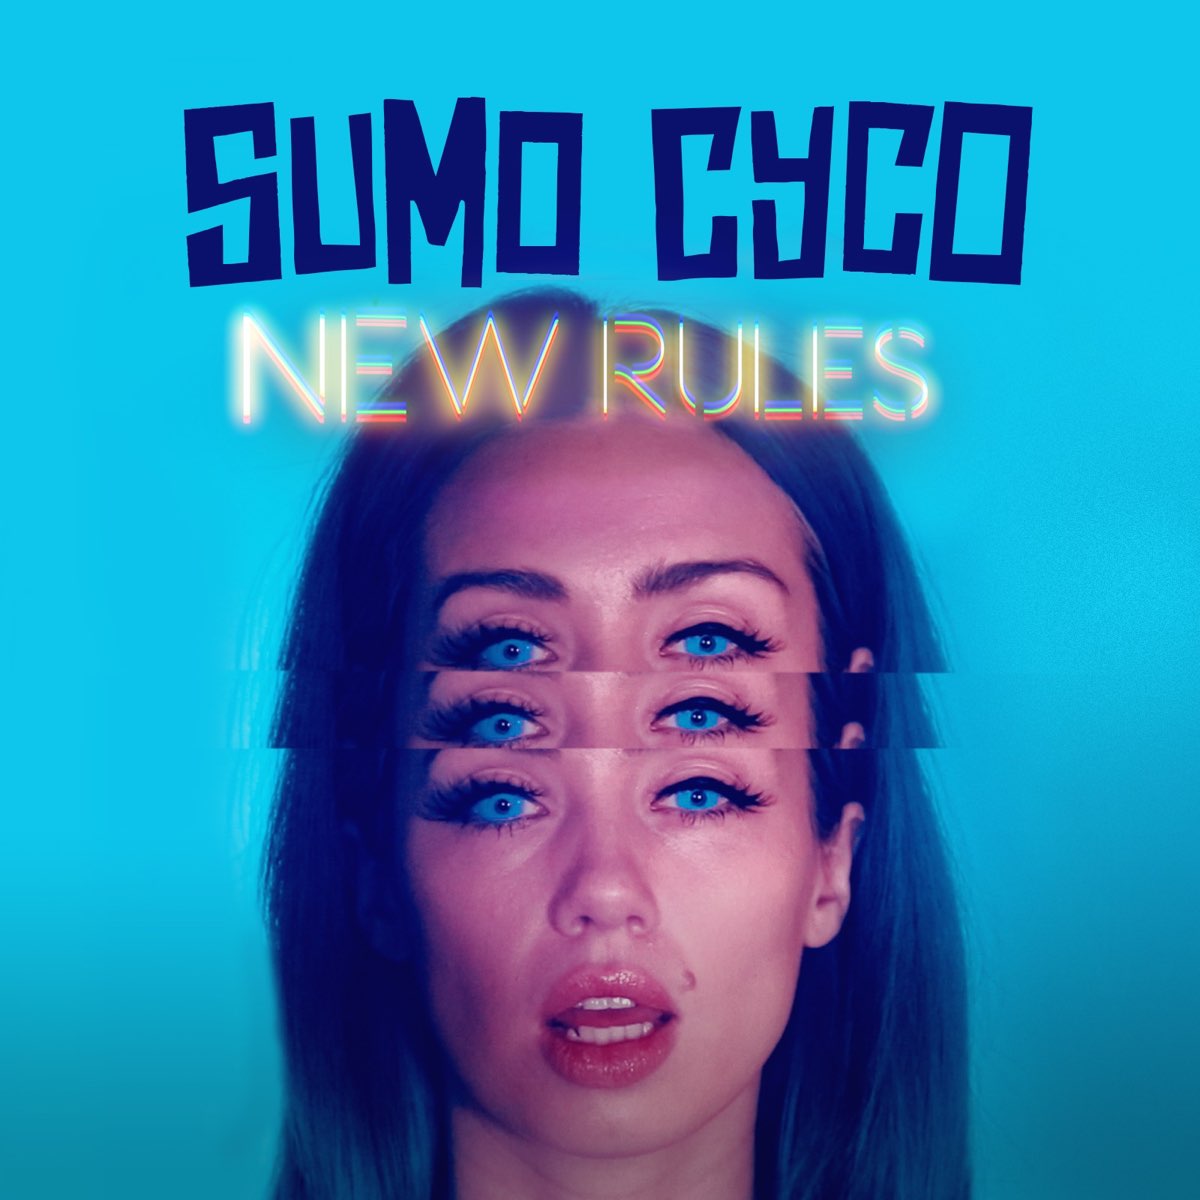 Sumo Cyco. Скай Суитнем Sumo Cyco. The New Rules. Песня New Rules. Певица хита new rules